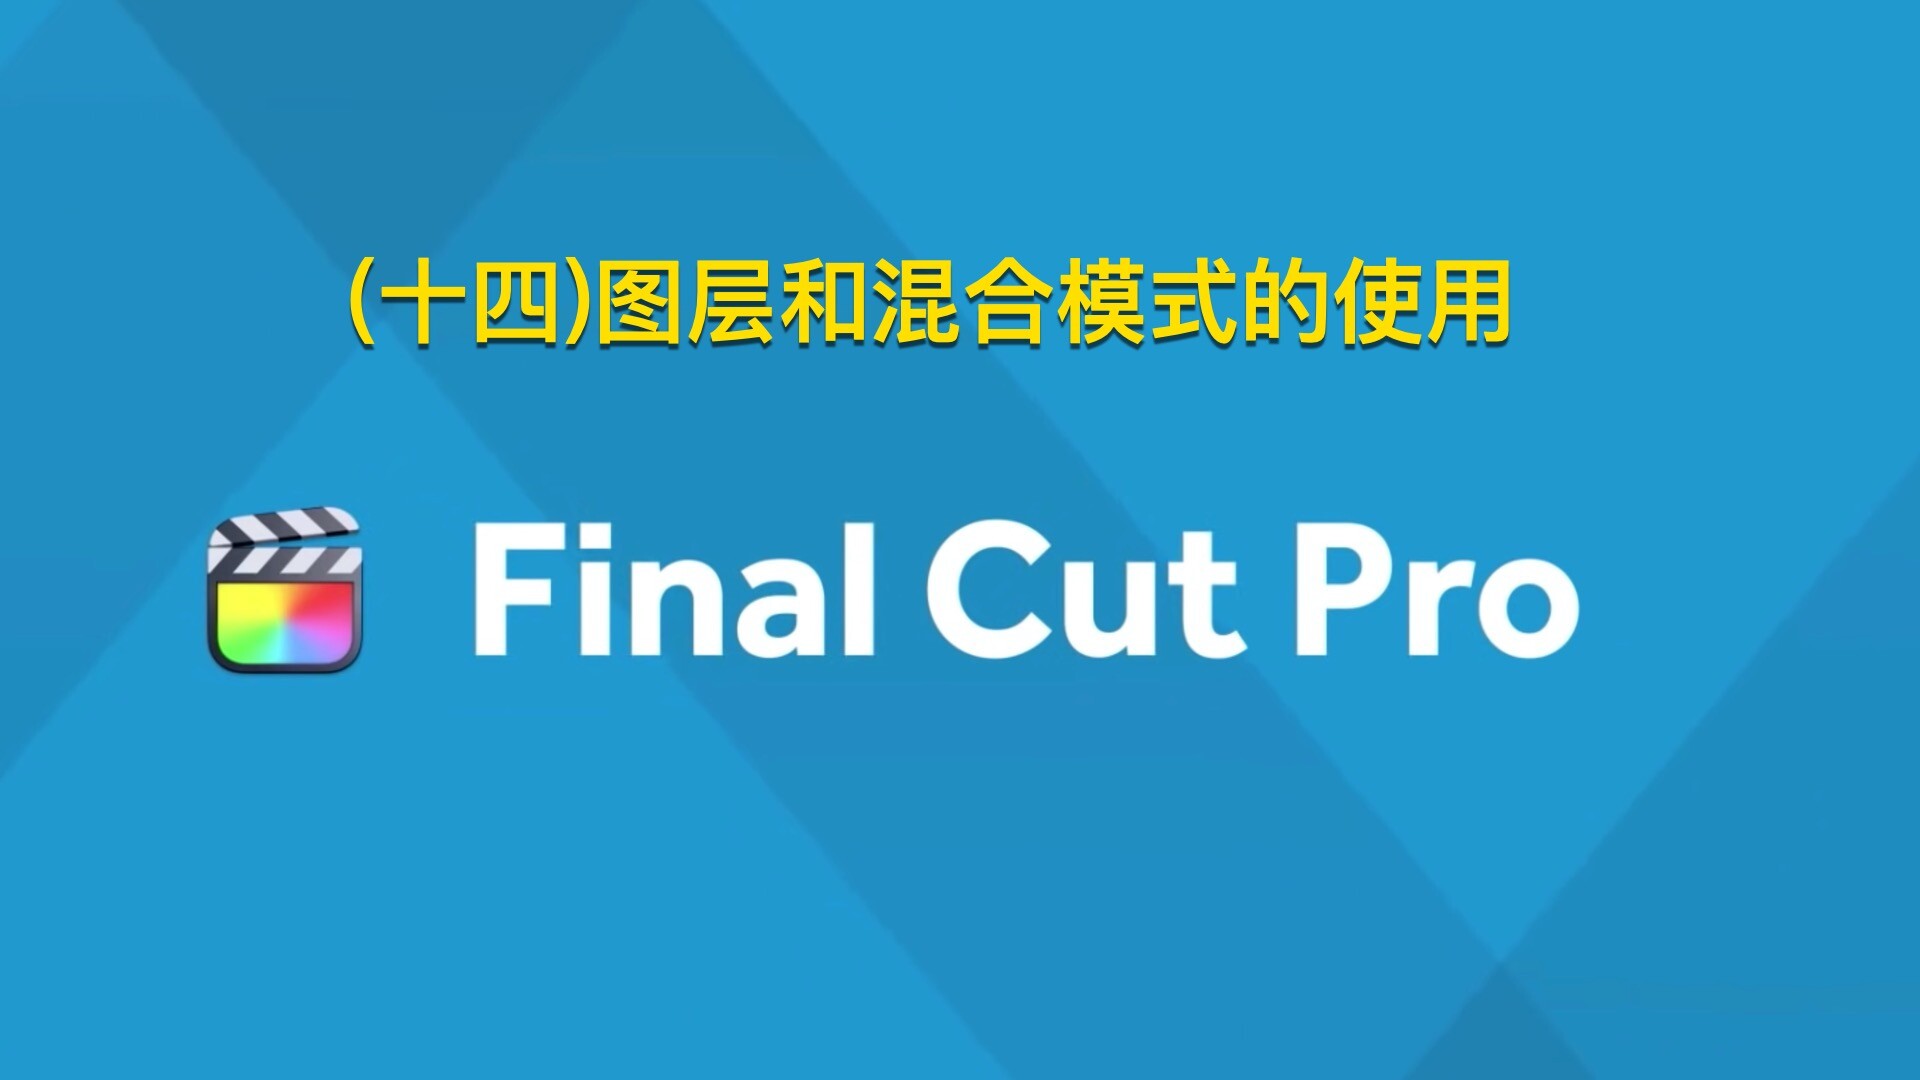 Final Cut Pro中文新手教程(14)图层和混合模式的使用